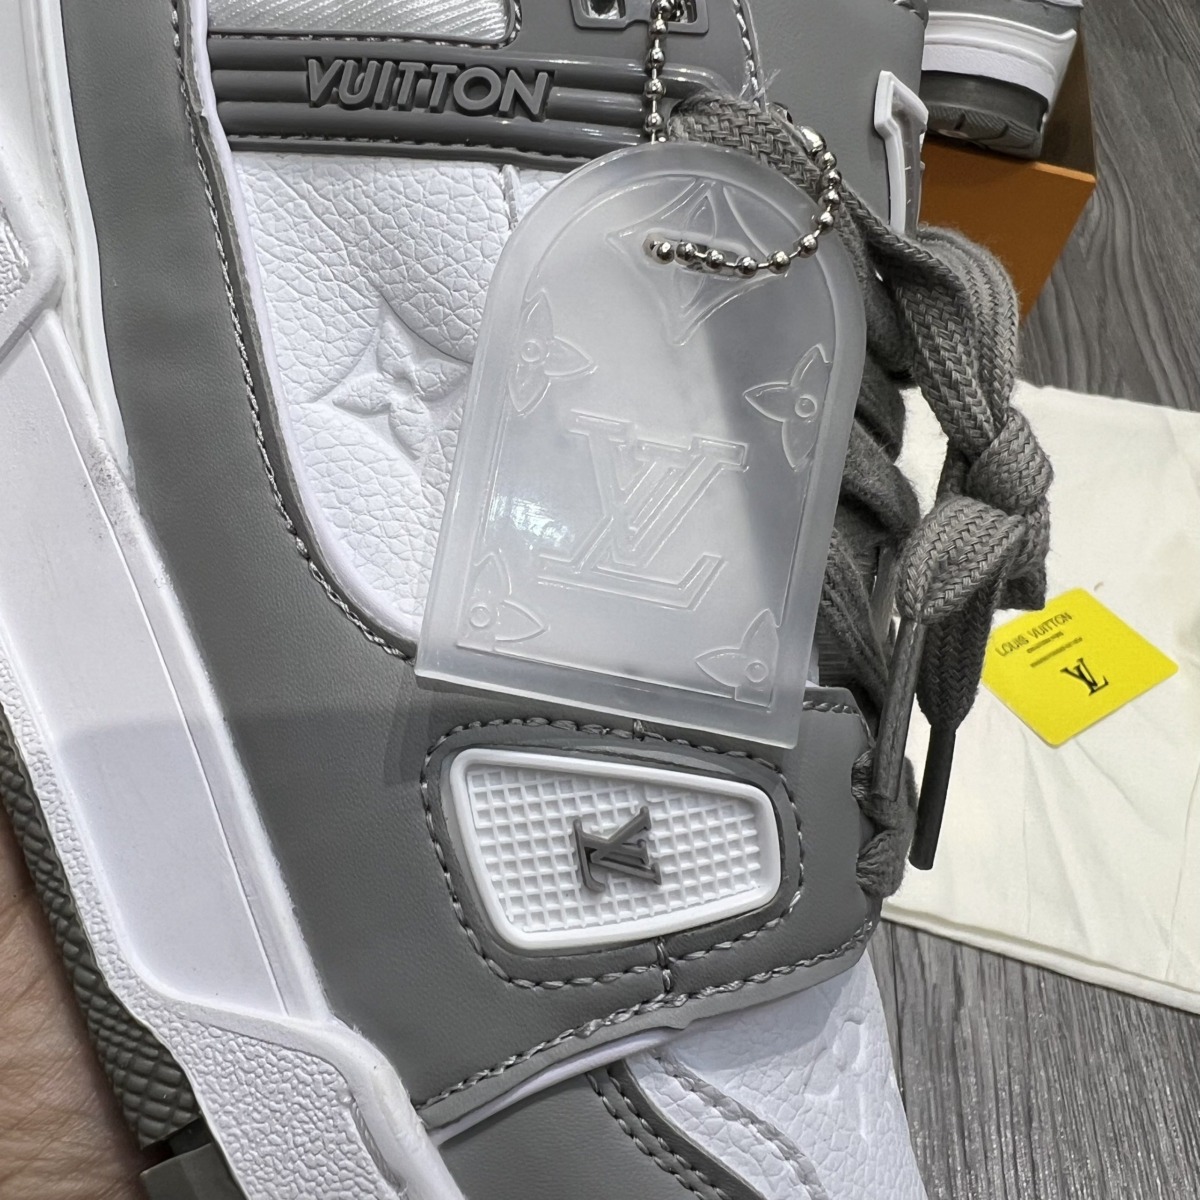 Giày Louis Vuitton LV Trainer Sneaker Grey Siêu Cấp